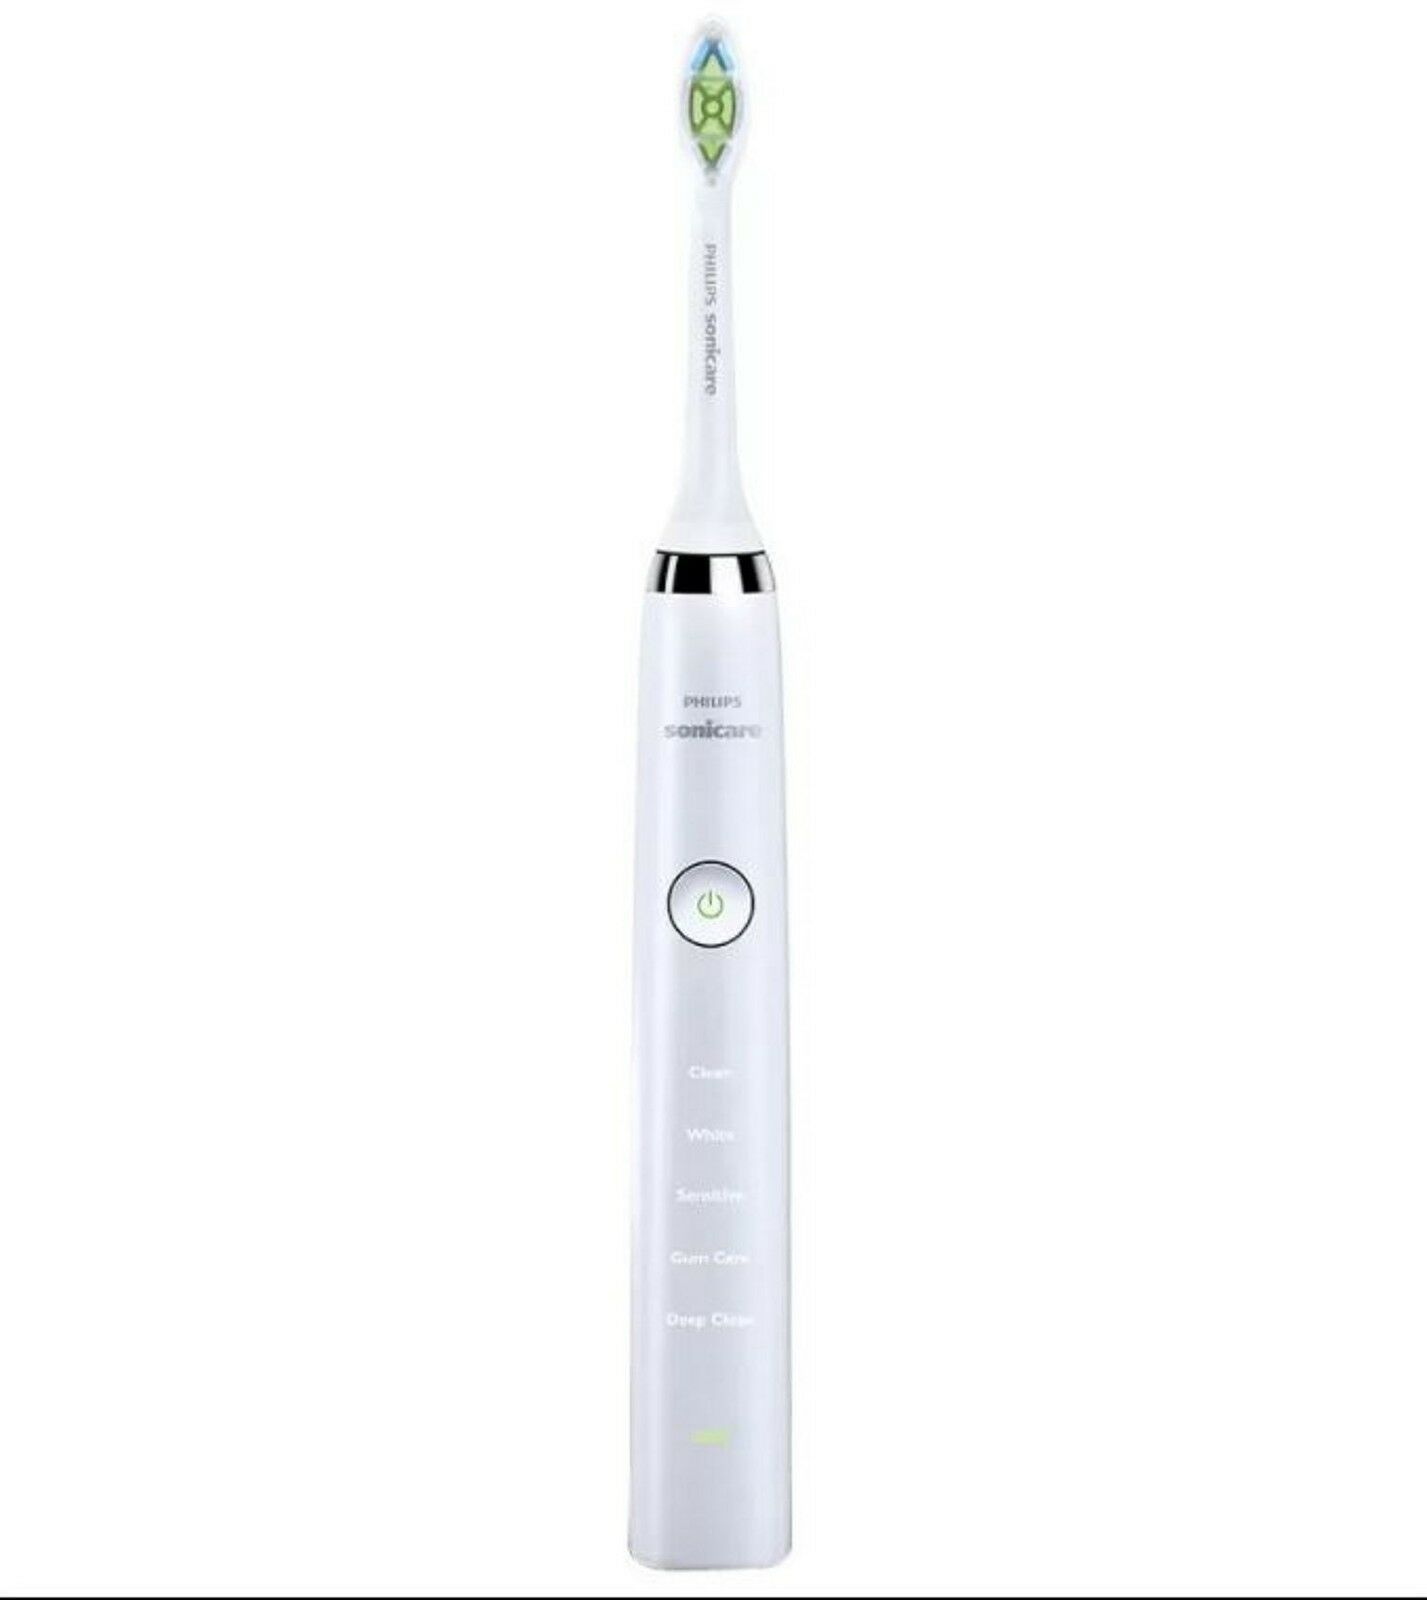 Diamondclean Sonic Electric Toothbrush Hx9332/04